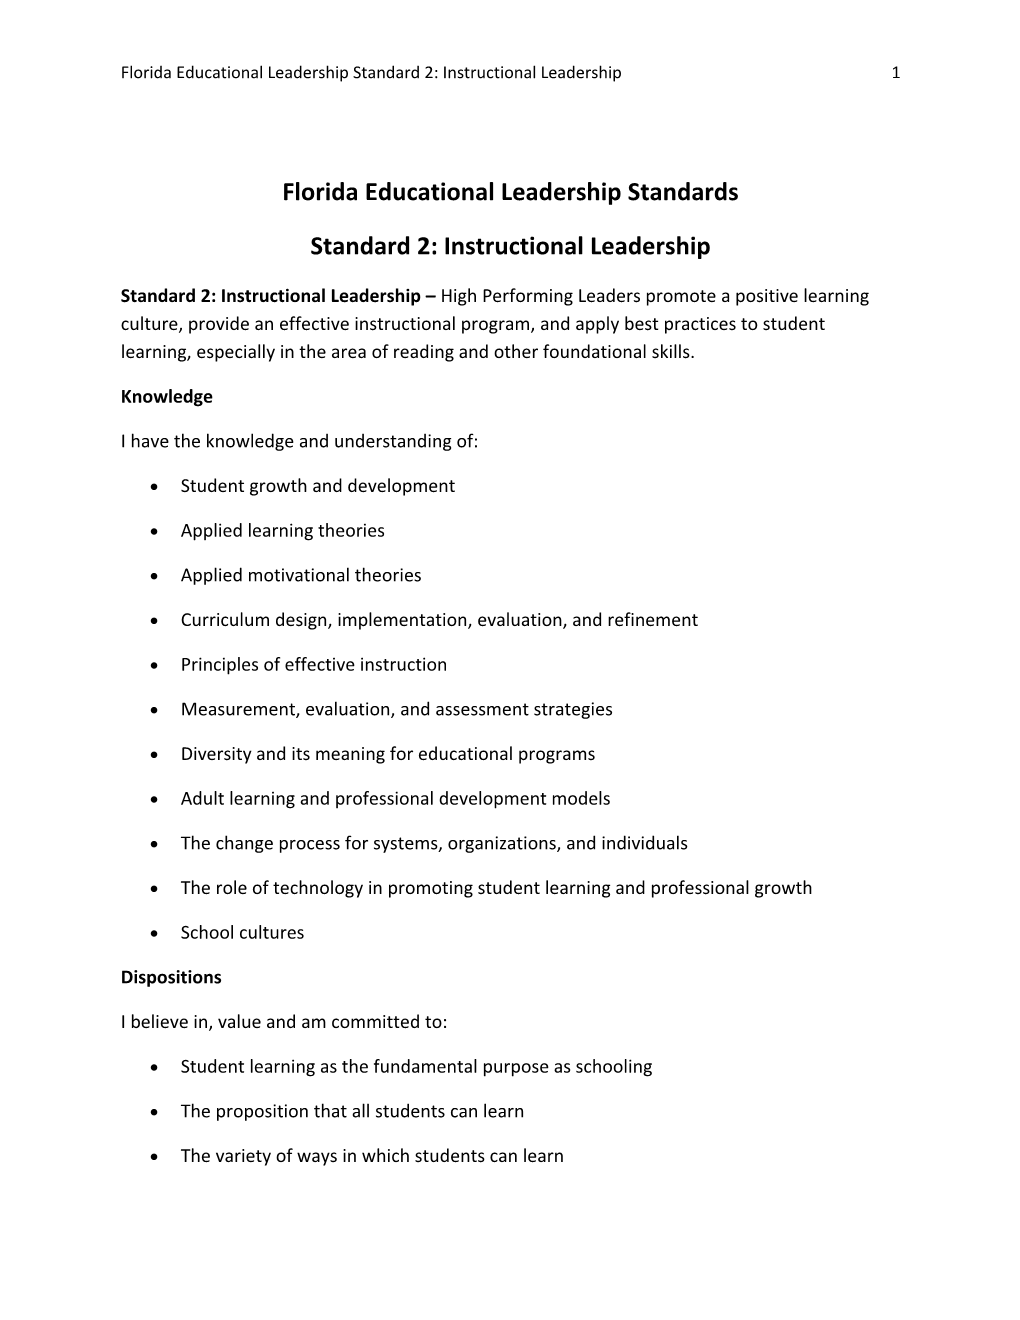 Florida Educational Leadership Standards